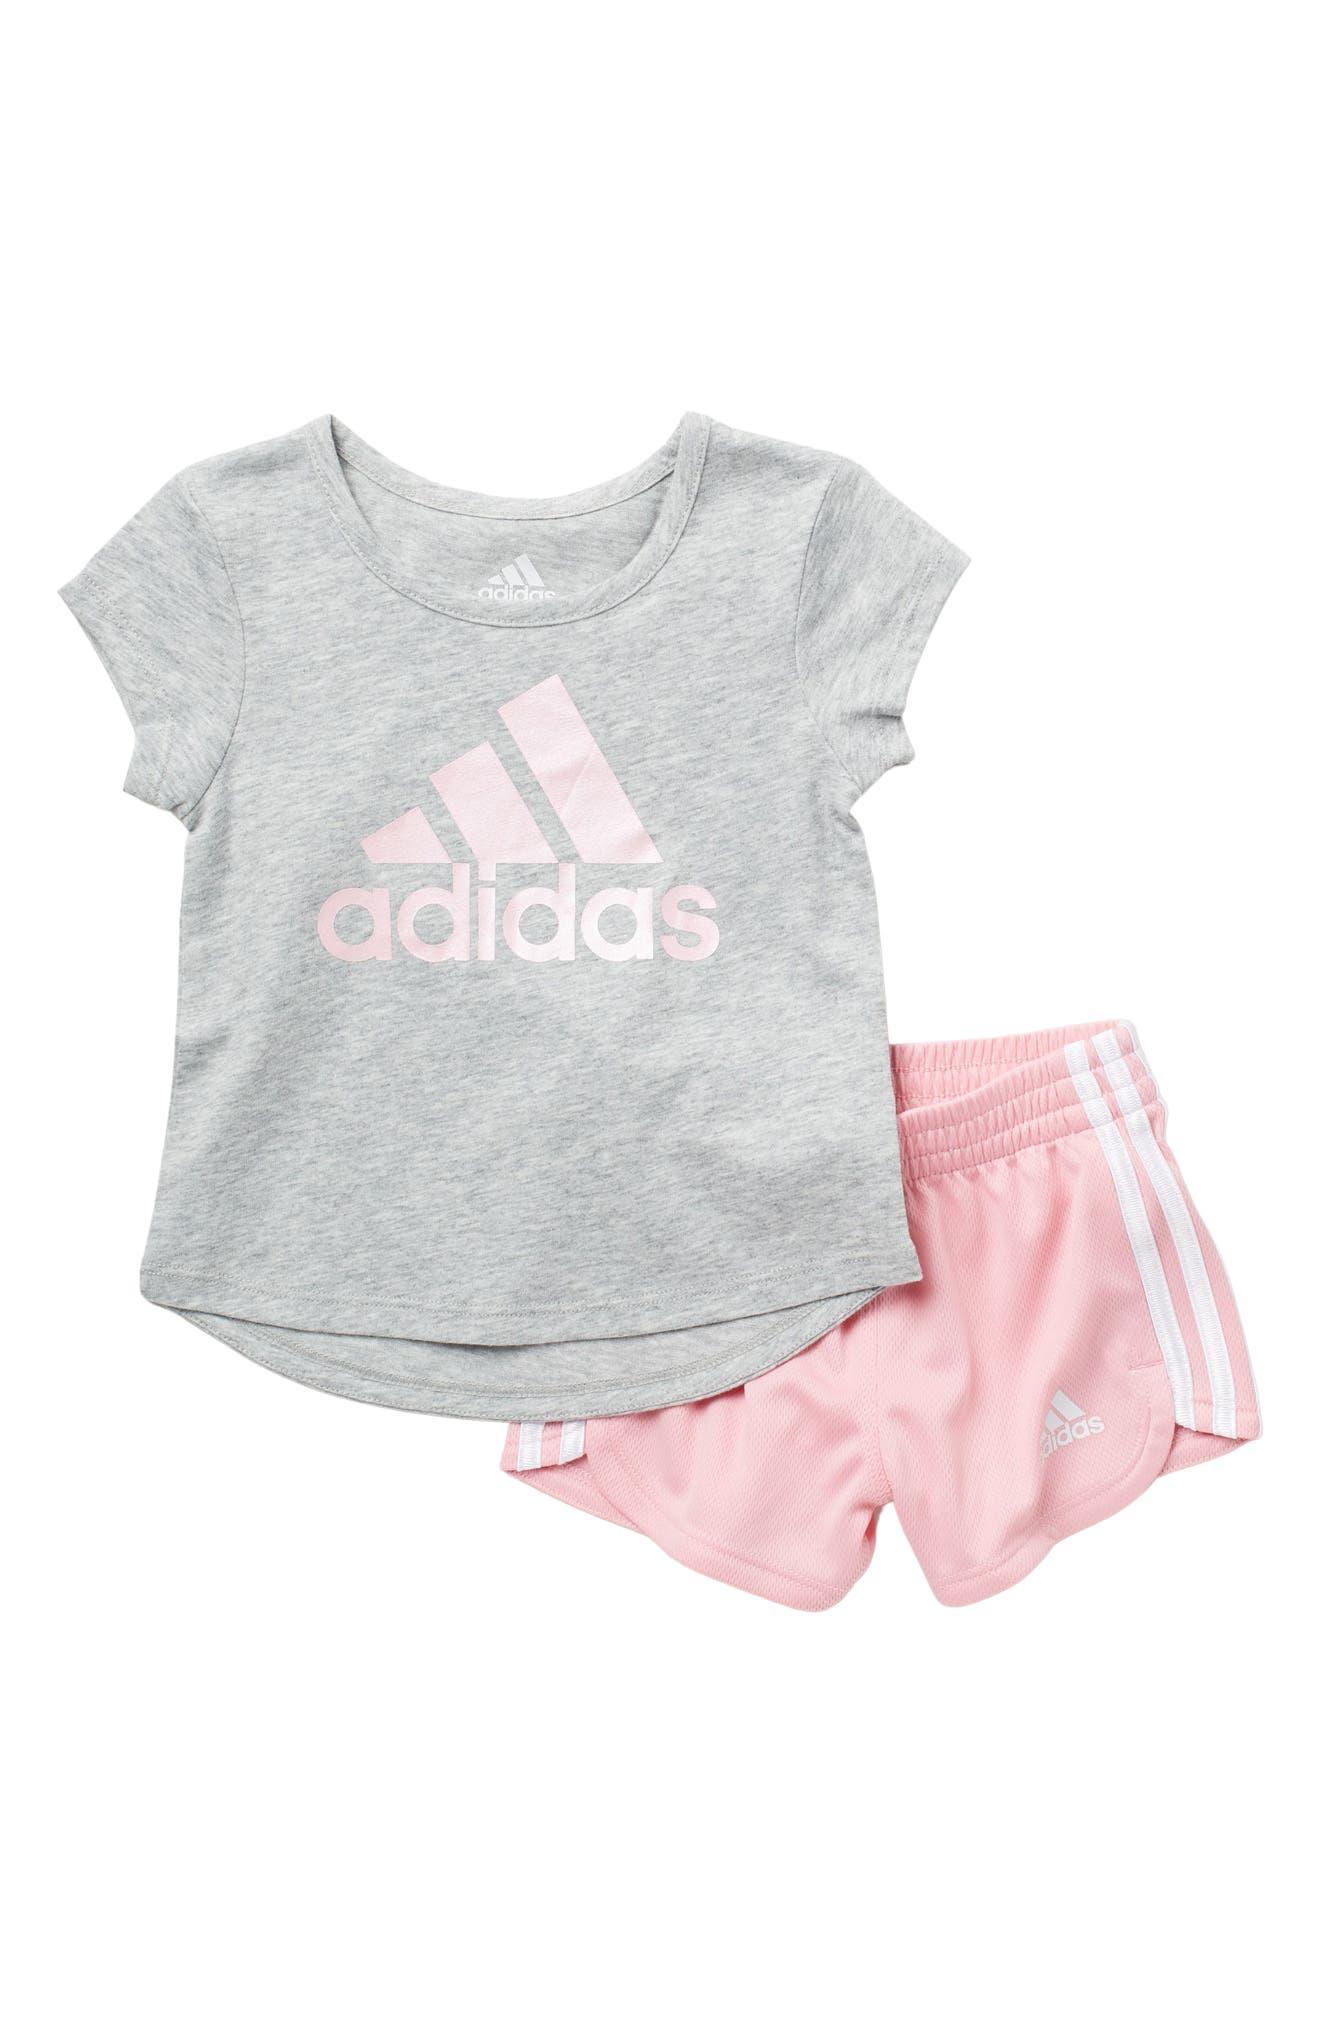 Adidas Originals Graphic T-shirt & Shorts 2-piece Set In Grey